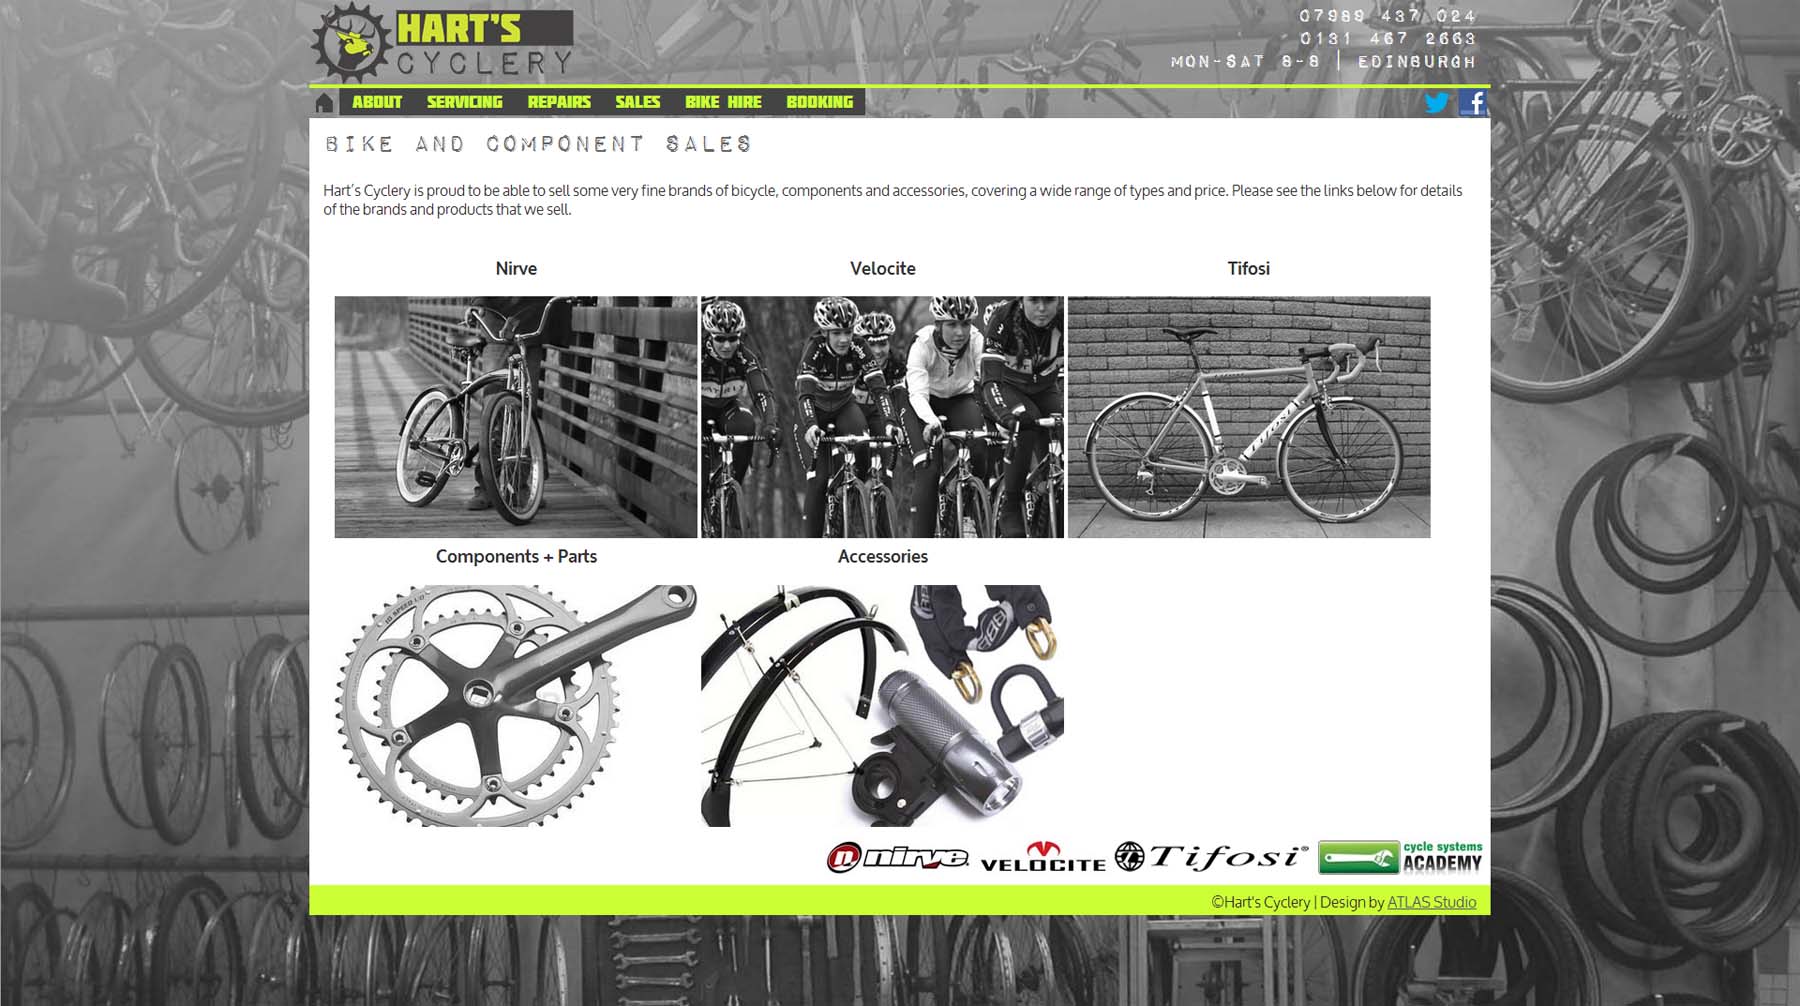 Hart's cyclery website